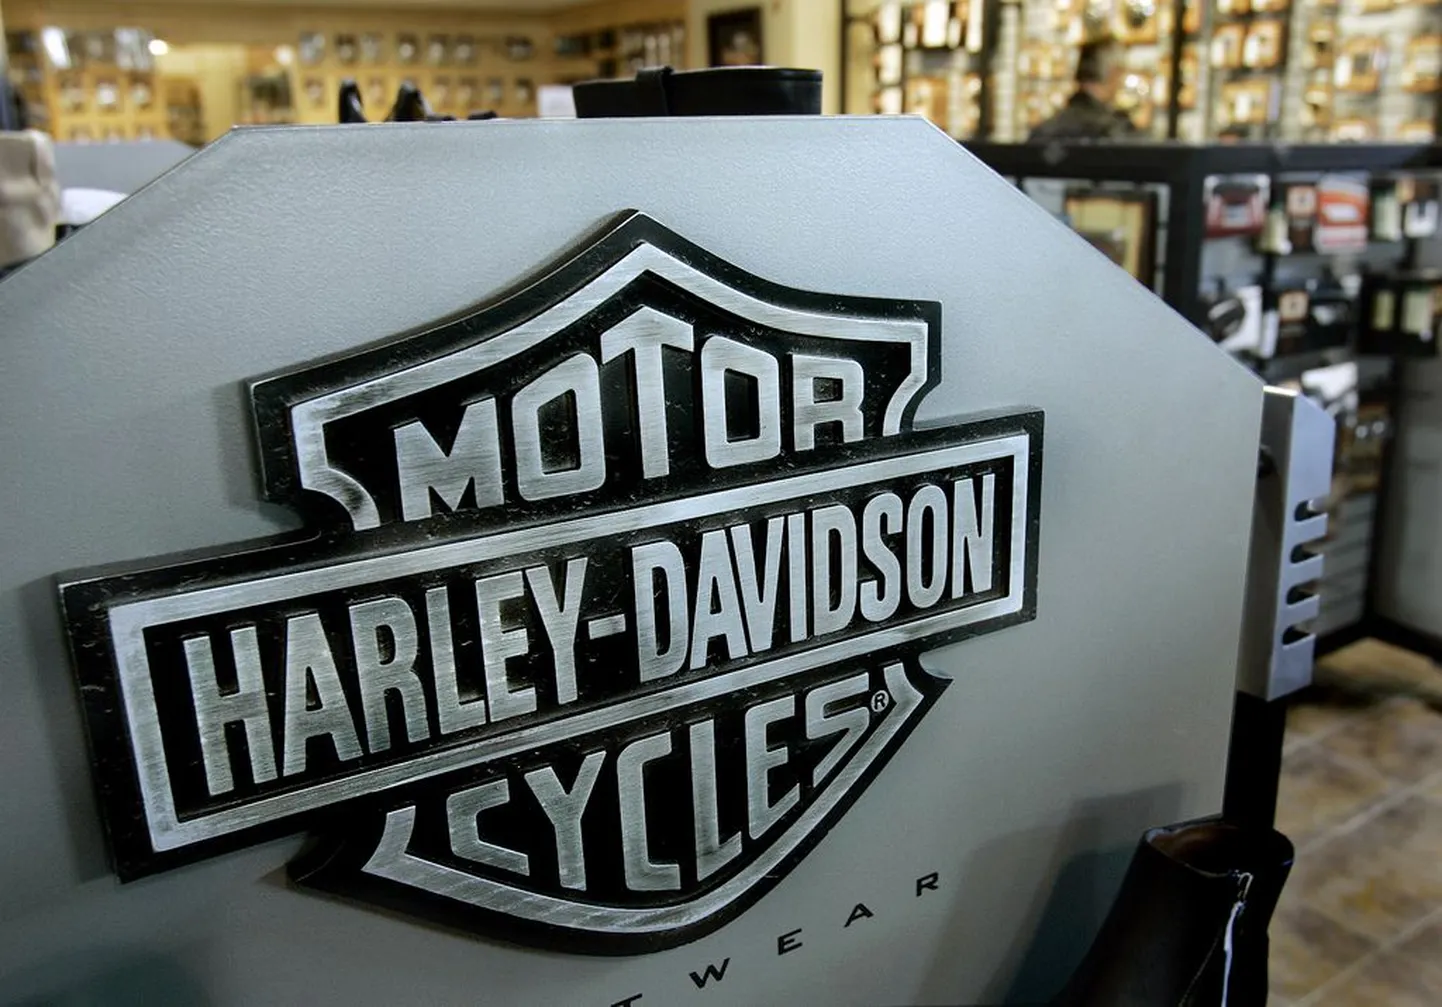 Harley Davidsoni logo